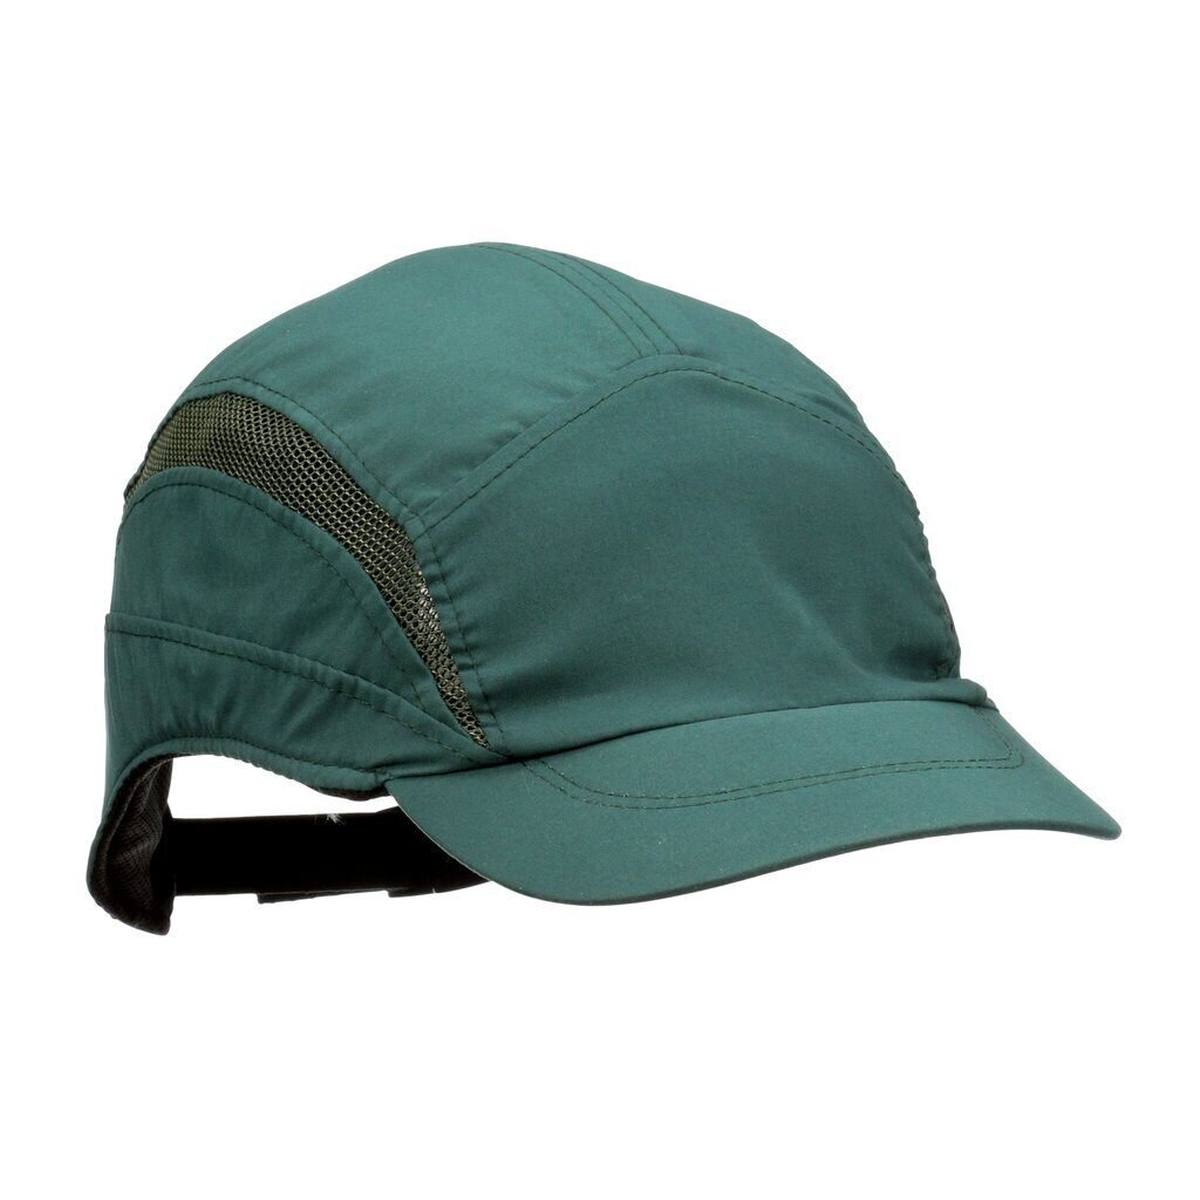 3M Scott First Base 3 Classic - bump cap in dark green - shortened peak 55 mm, EN812